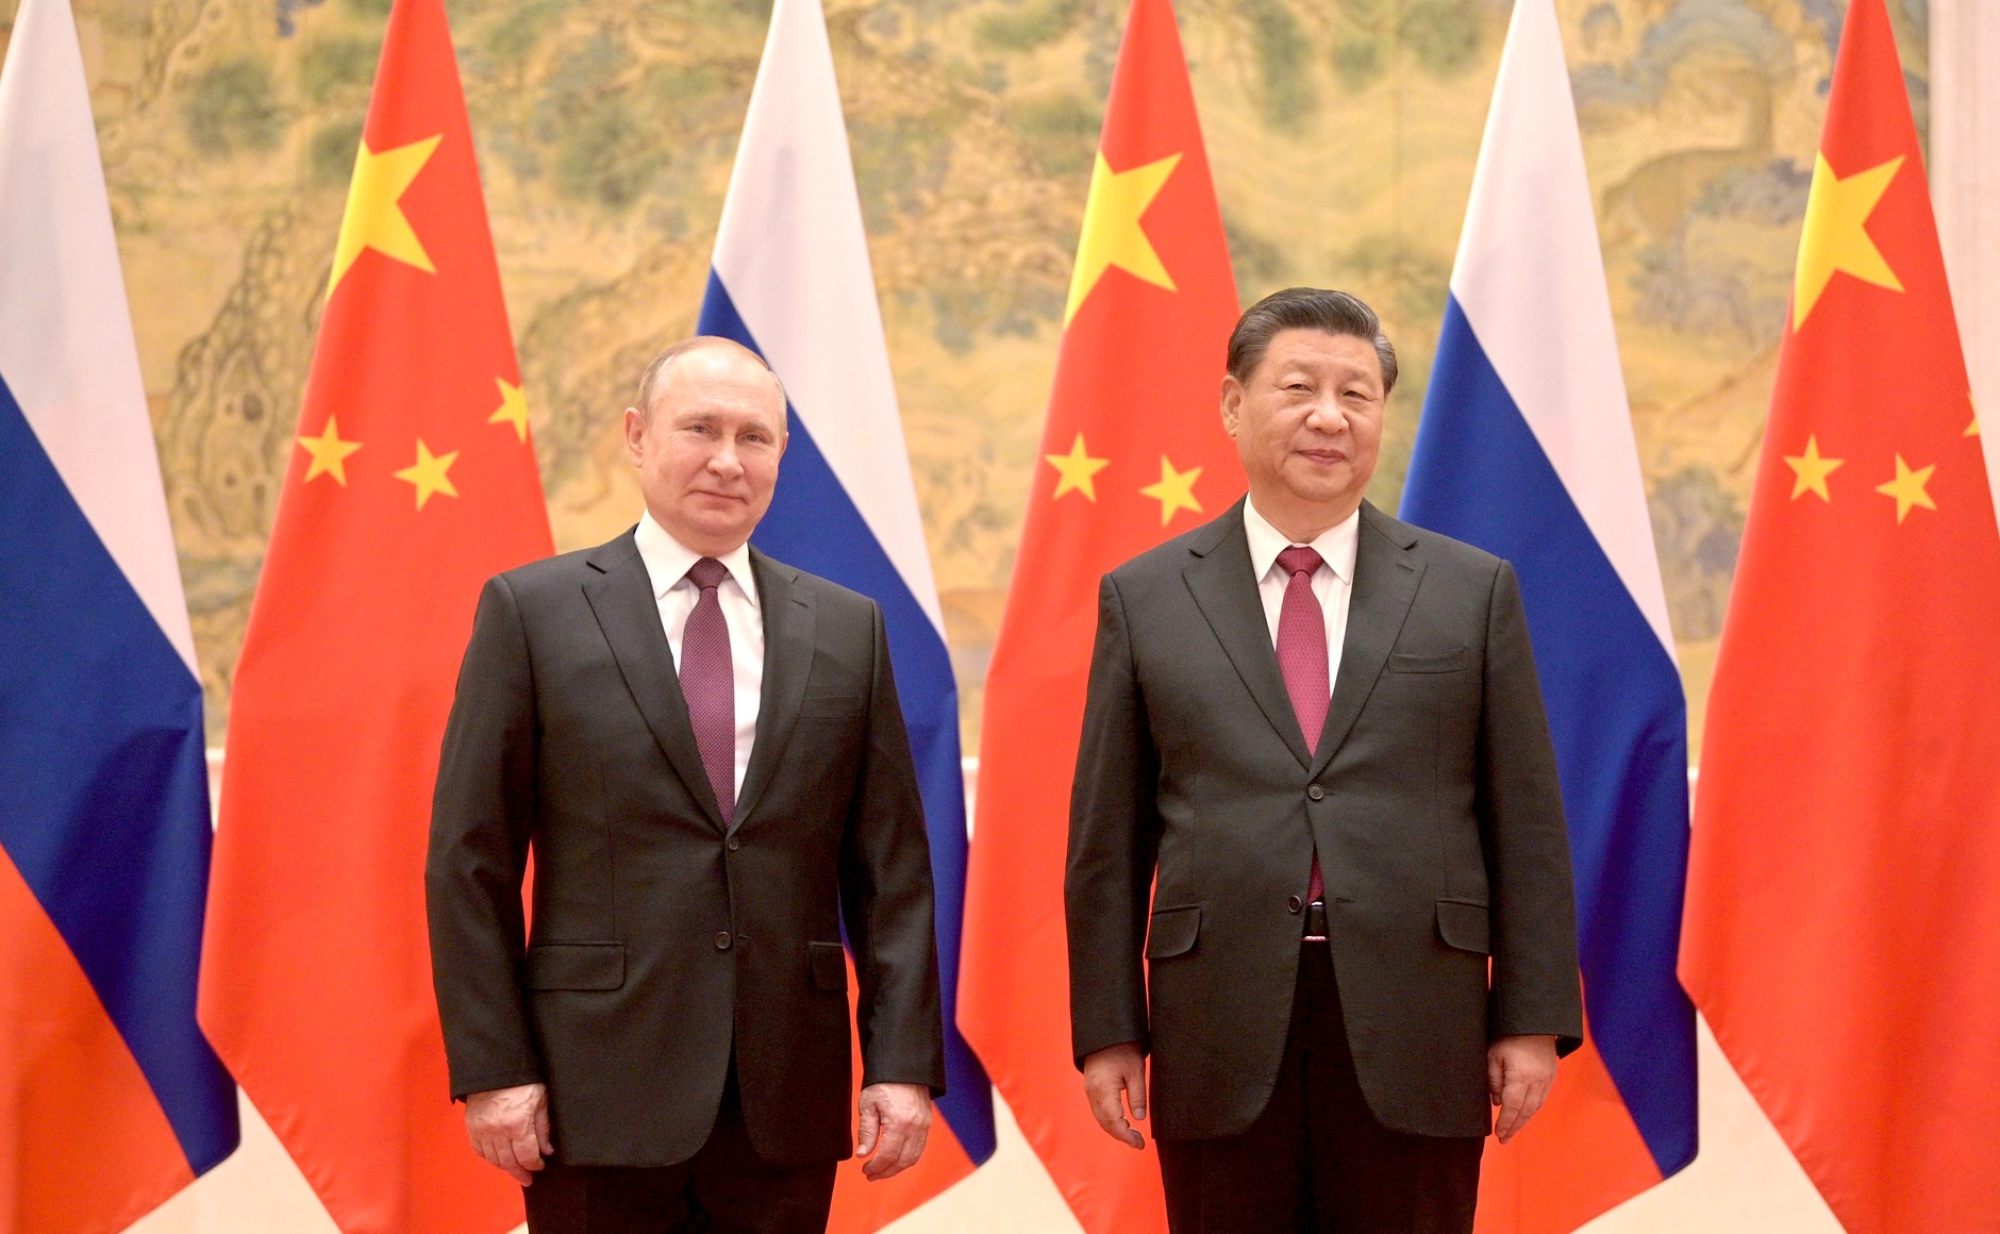 Putin and Xi last met in person in Beijing in February, weeks before Russia invaded Ukraine. Photo: Kremlin/dpa